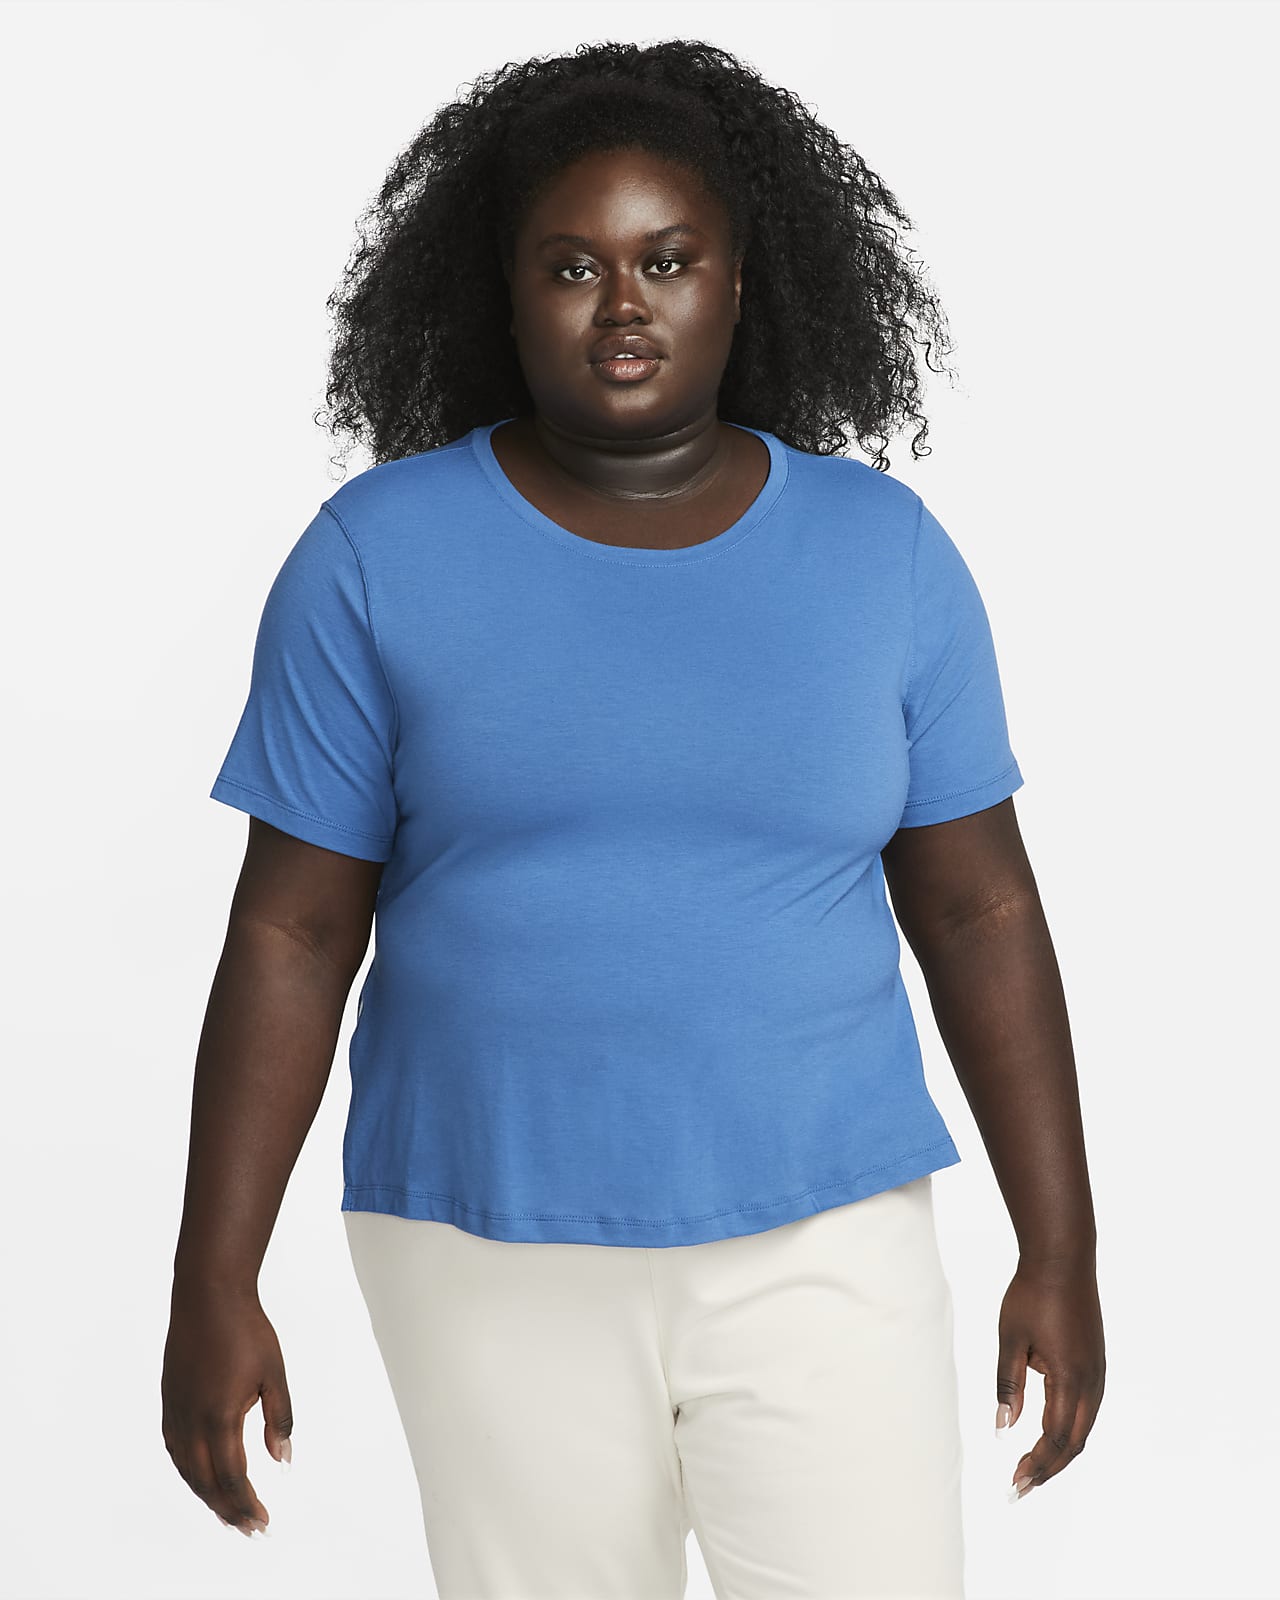 Womens Plus Size Yoga Tops & T-Shirts.